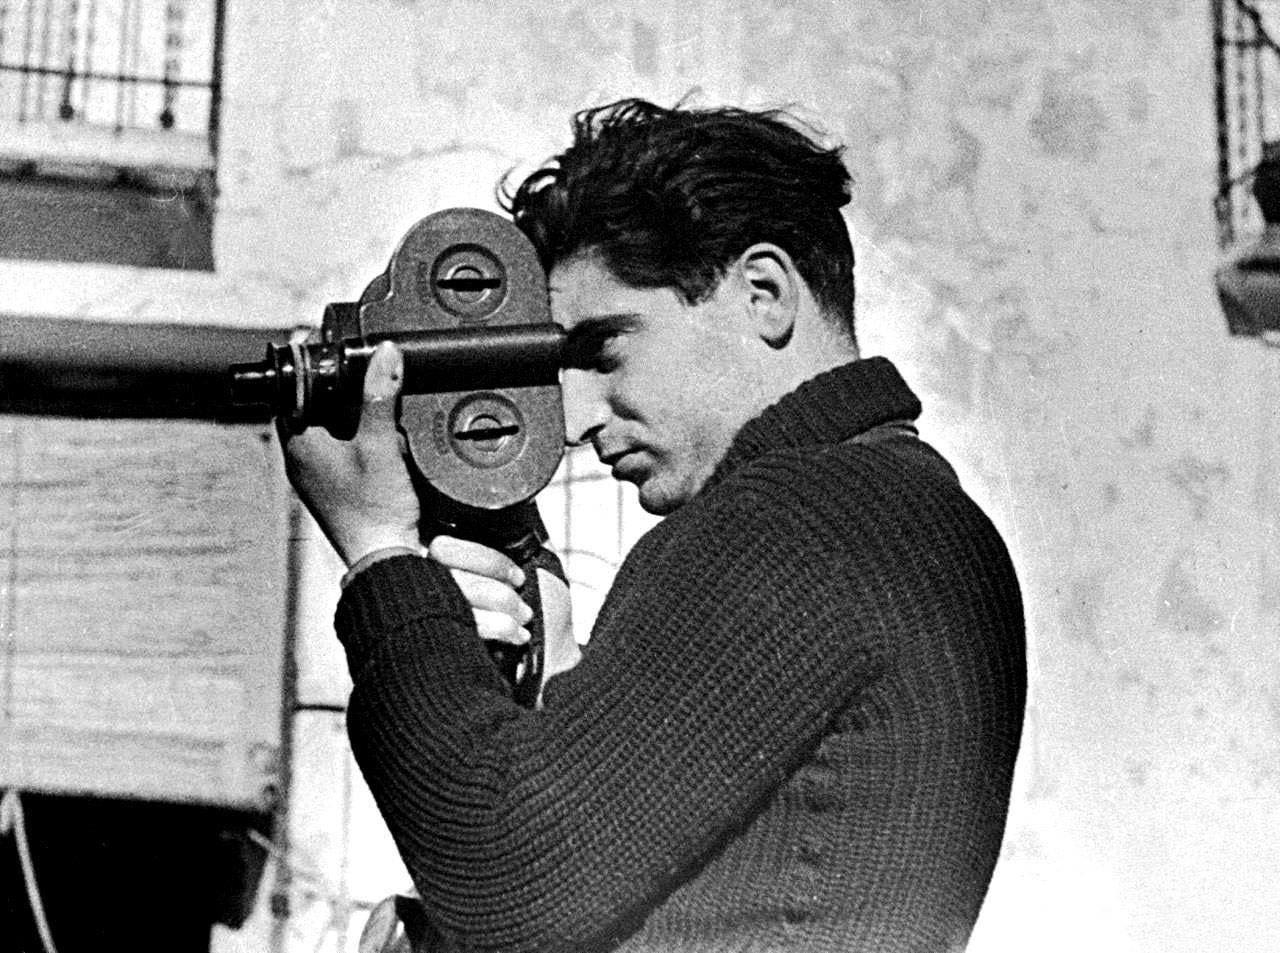 Robert Capa, Spain 1937 by Gerda Taro